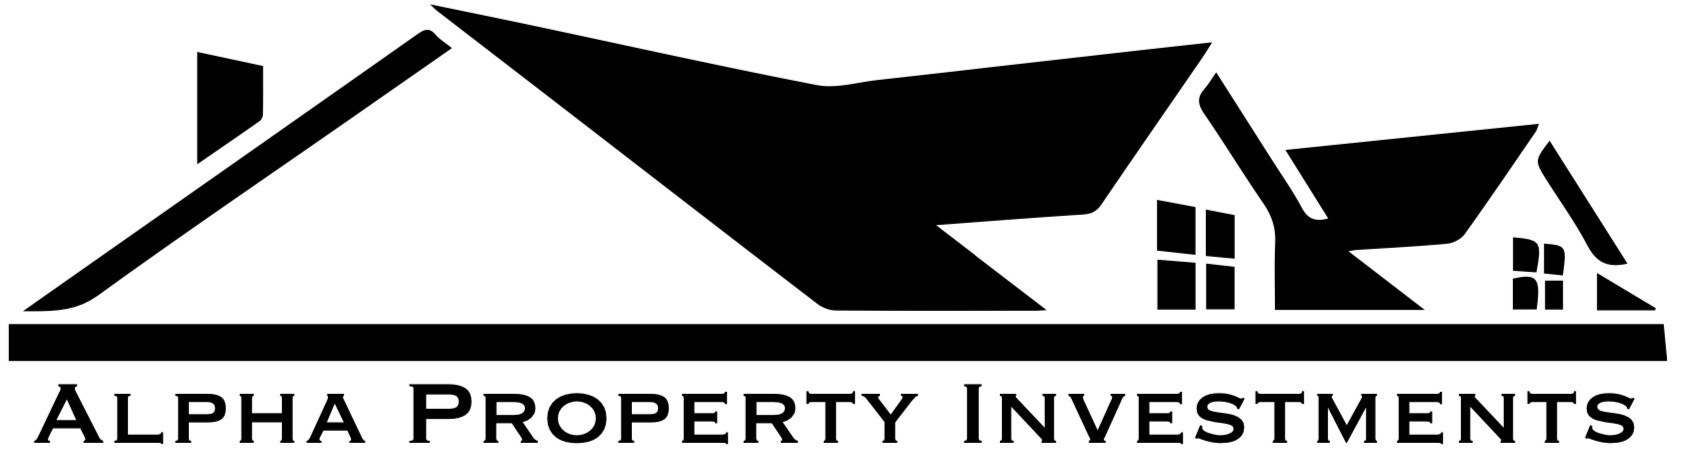 Alpha Property Investments, LLC